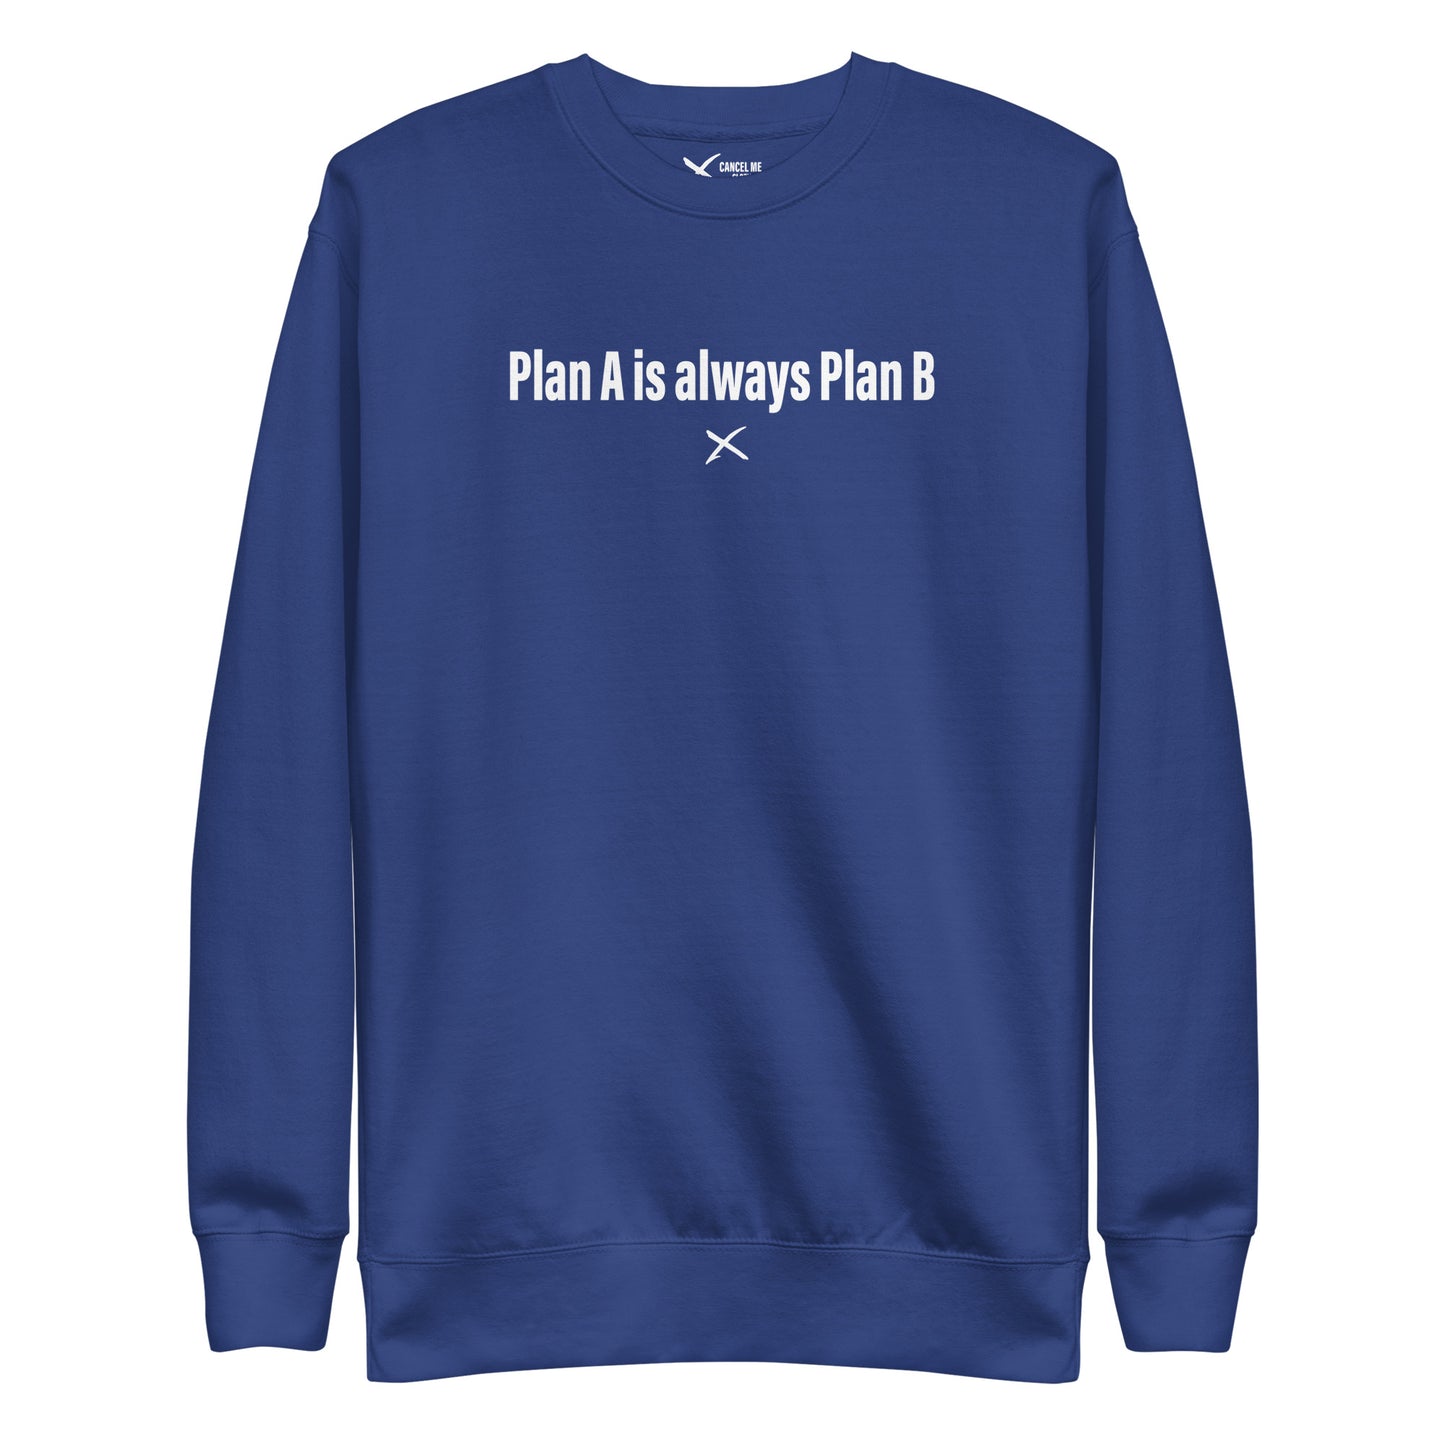 Plan A is always Plan B - Sweatshirt